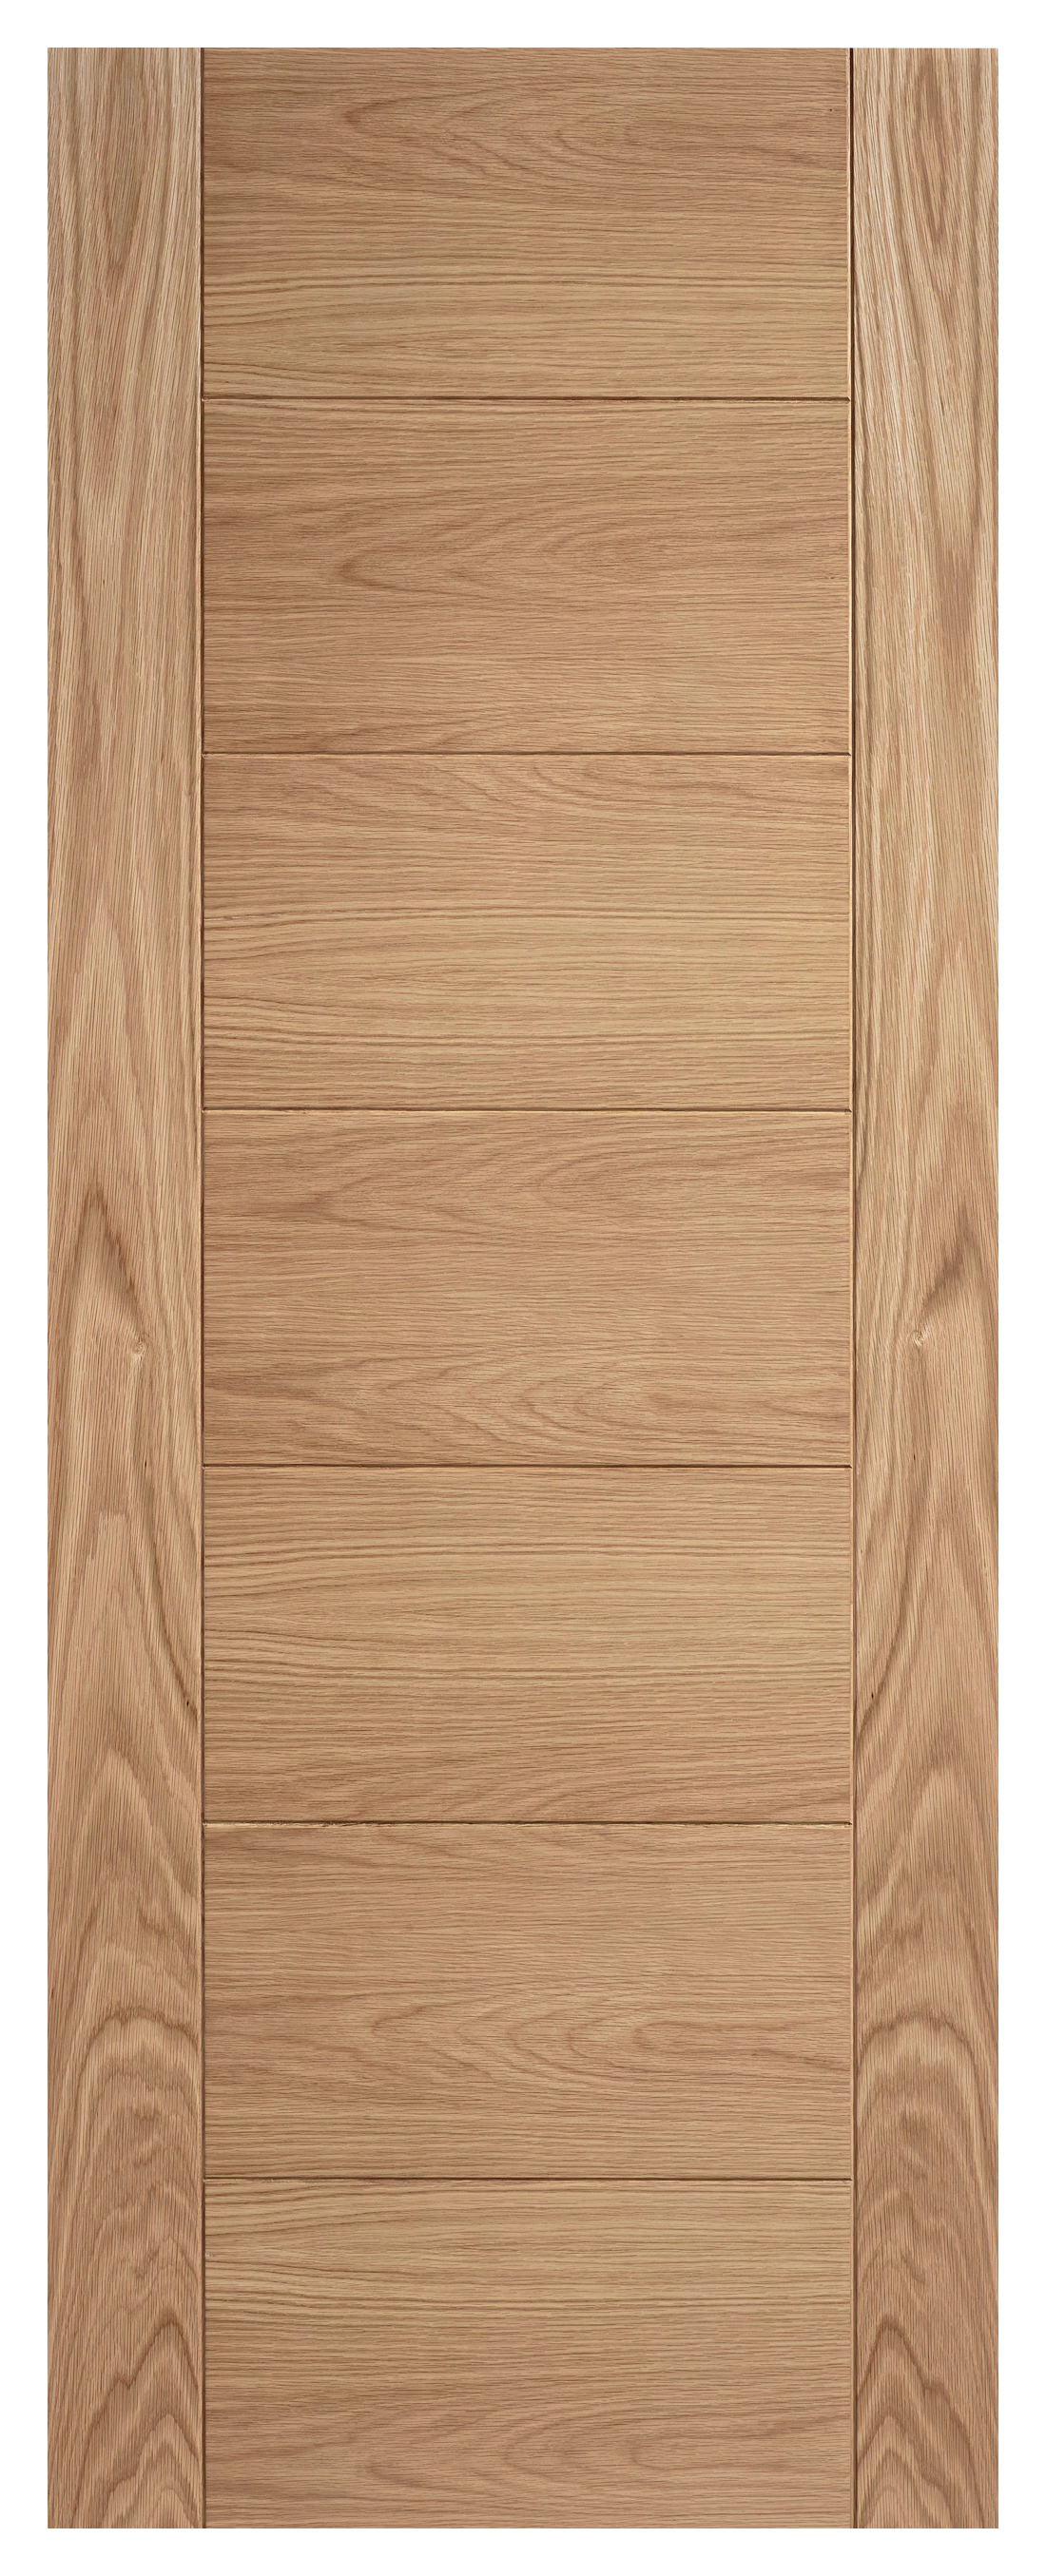 Image of LPD Internal Carini 7 Panel Unfinished Oak FD30 Fire Door - 838 x 1981mm